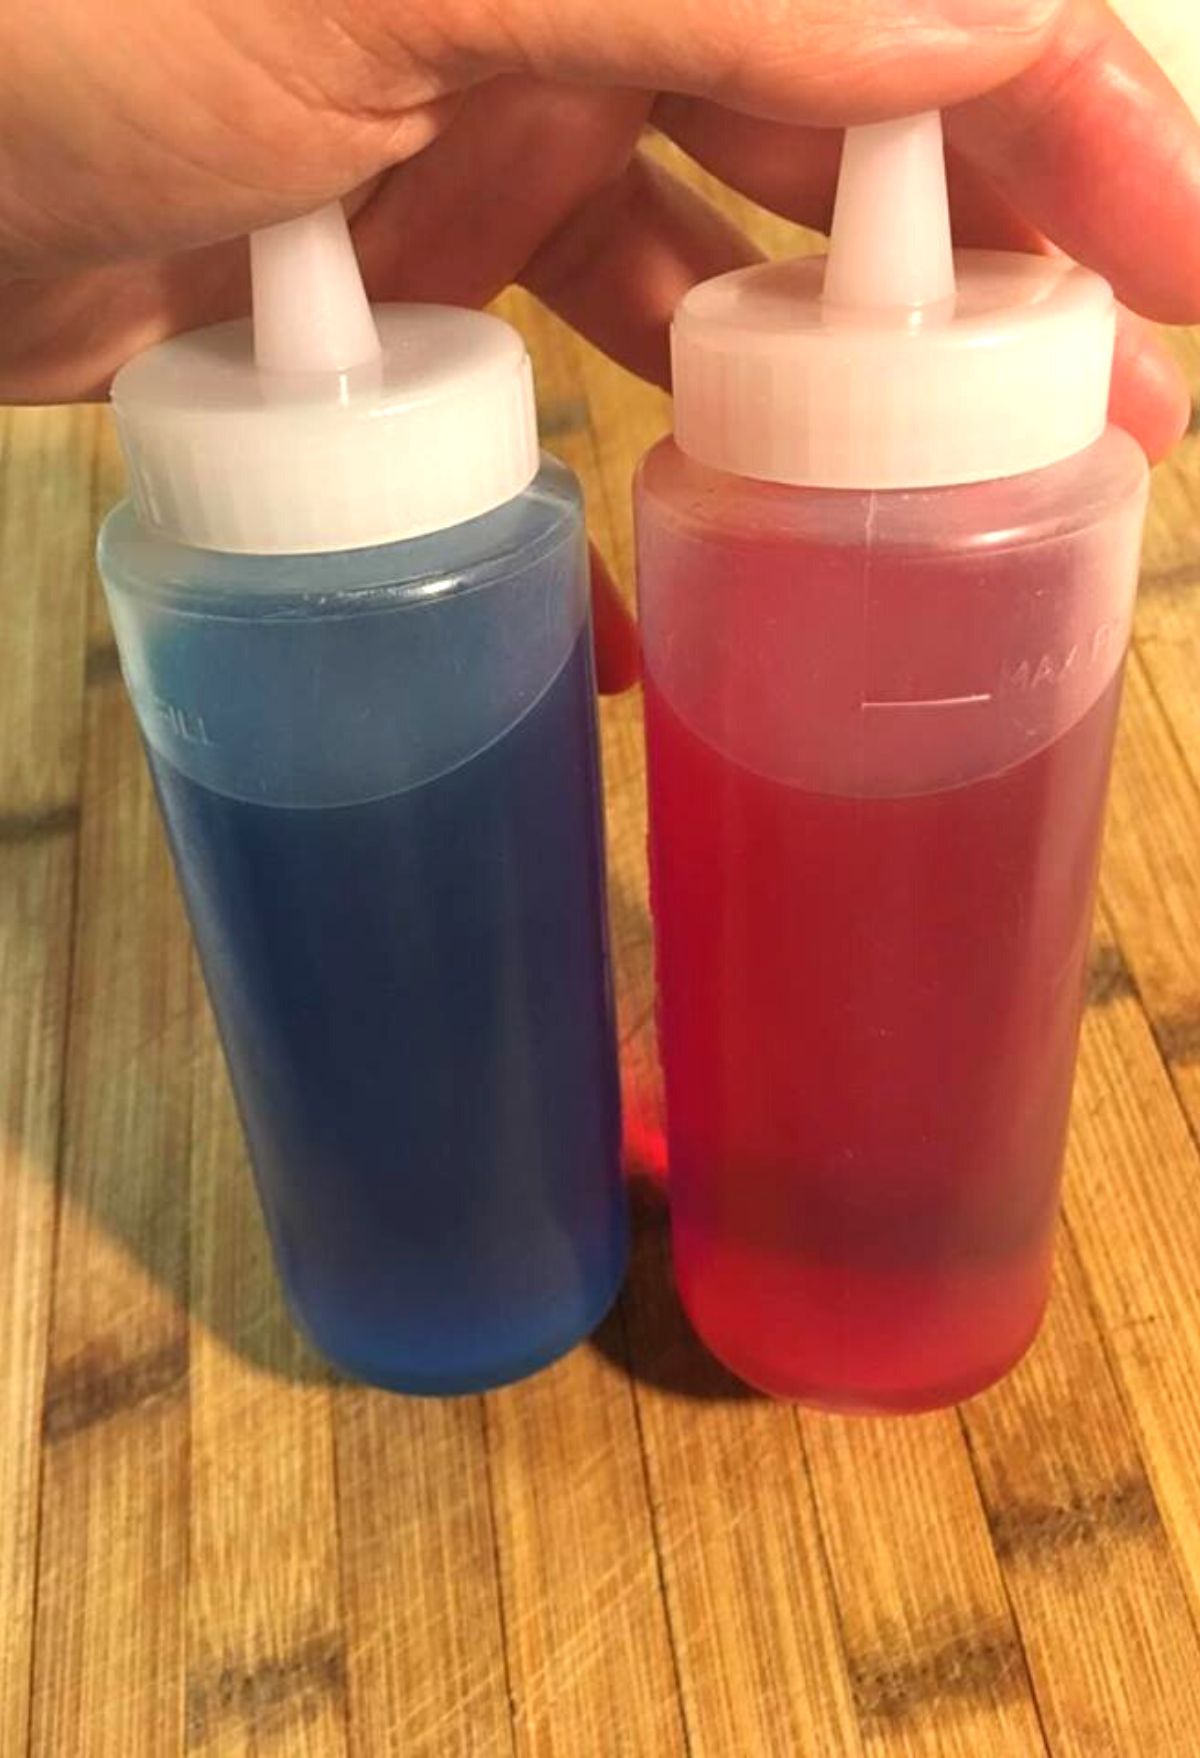 jello in squeeze bottles